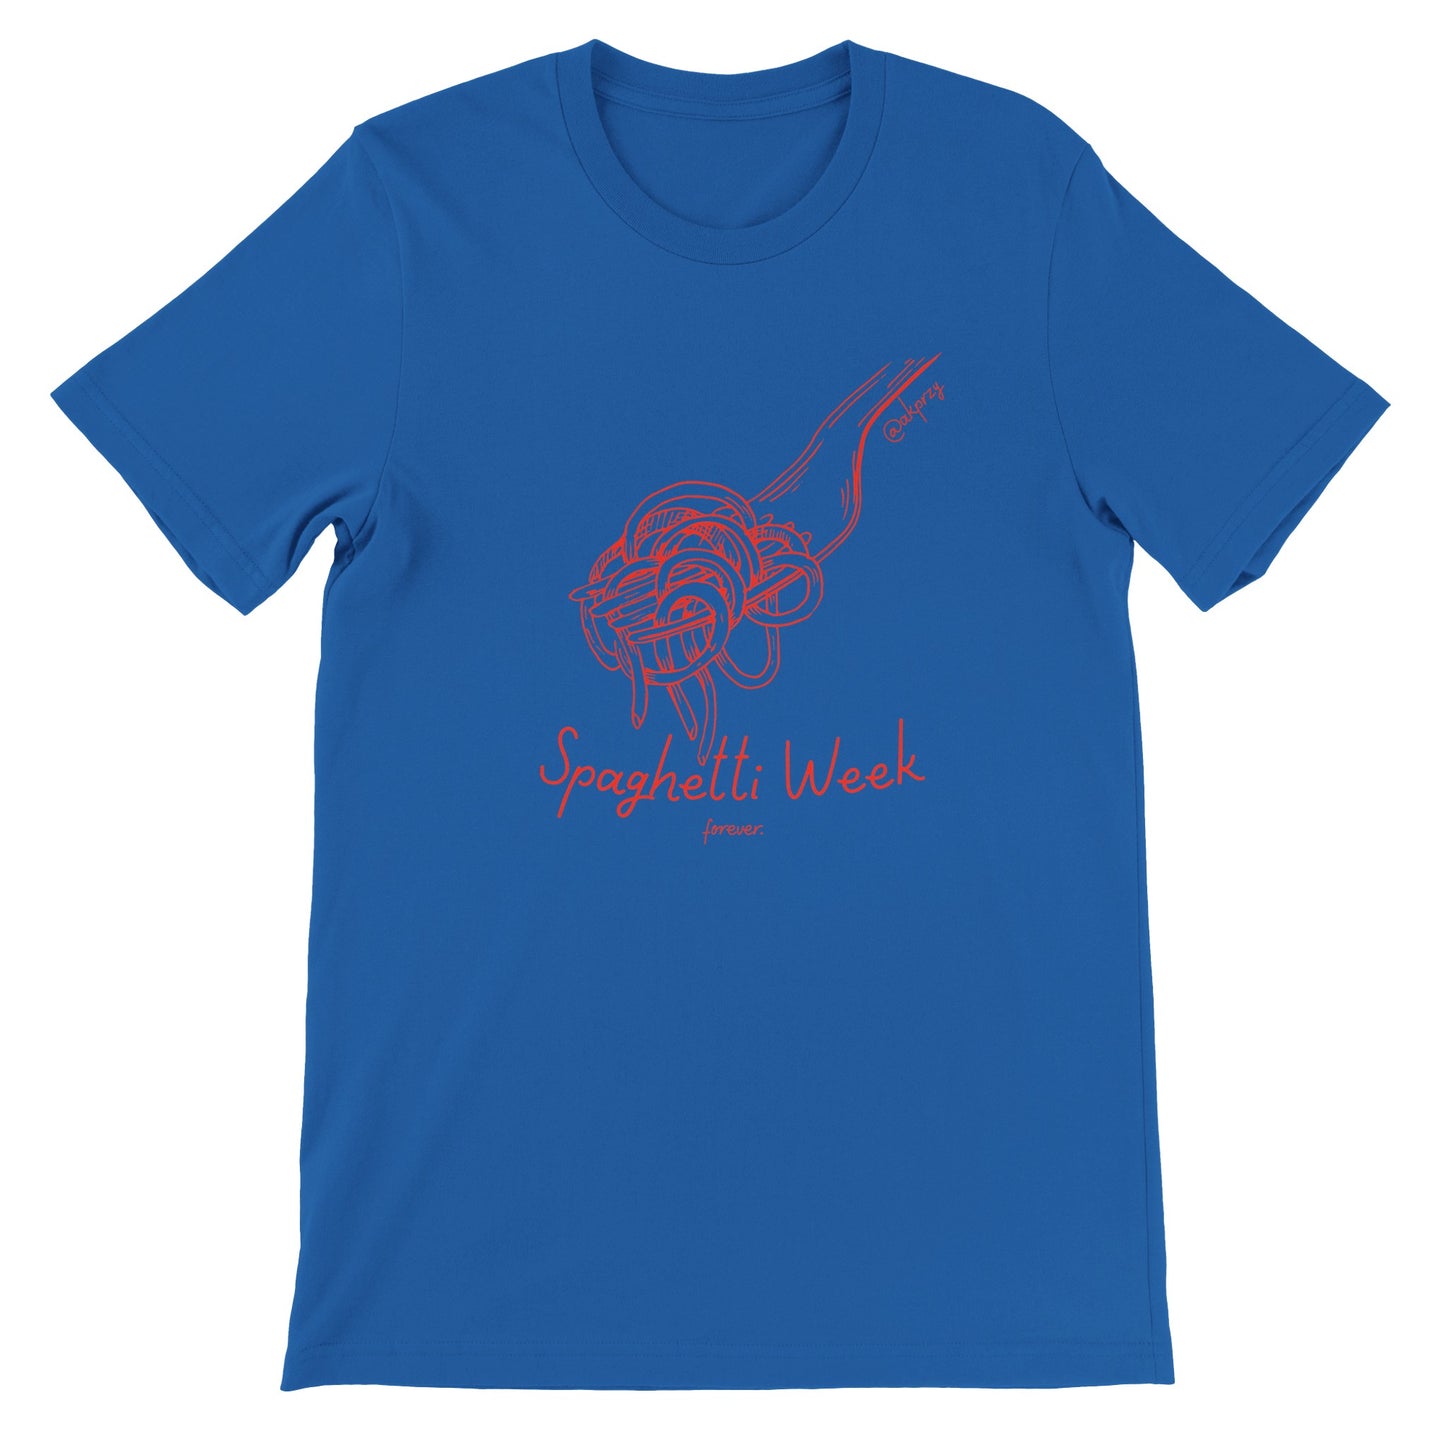 Premium Unisex Crewneck T-shirt - Spaghetti Week